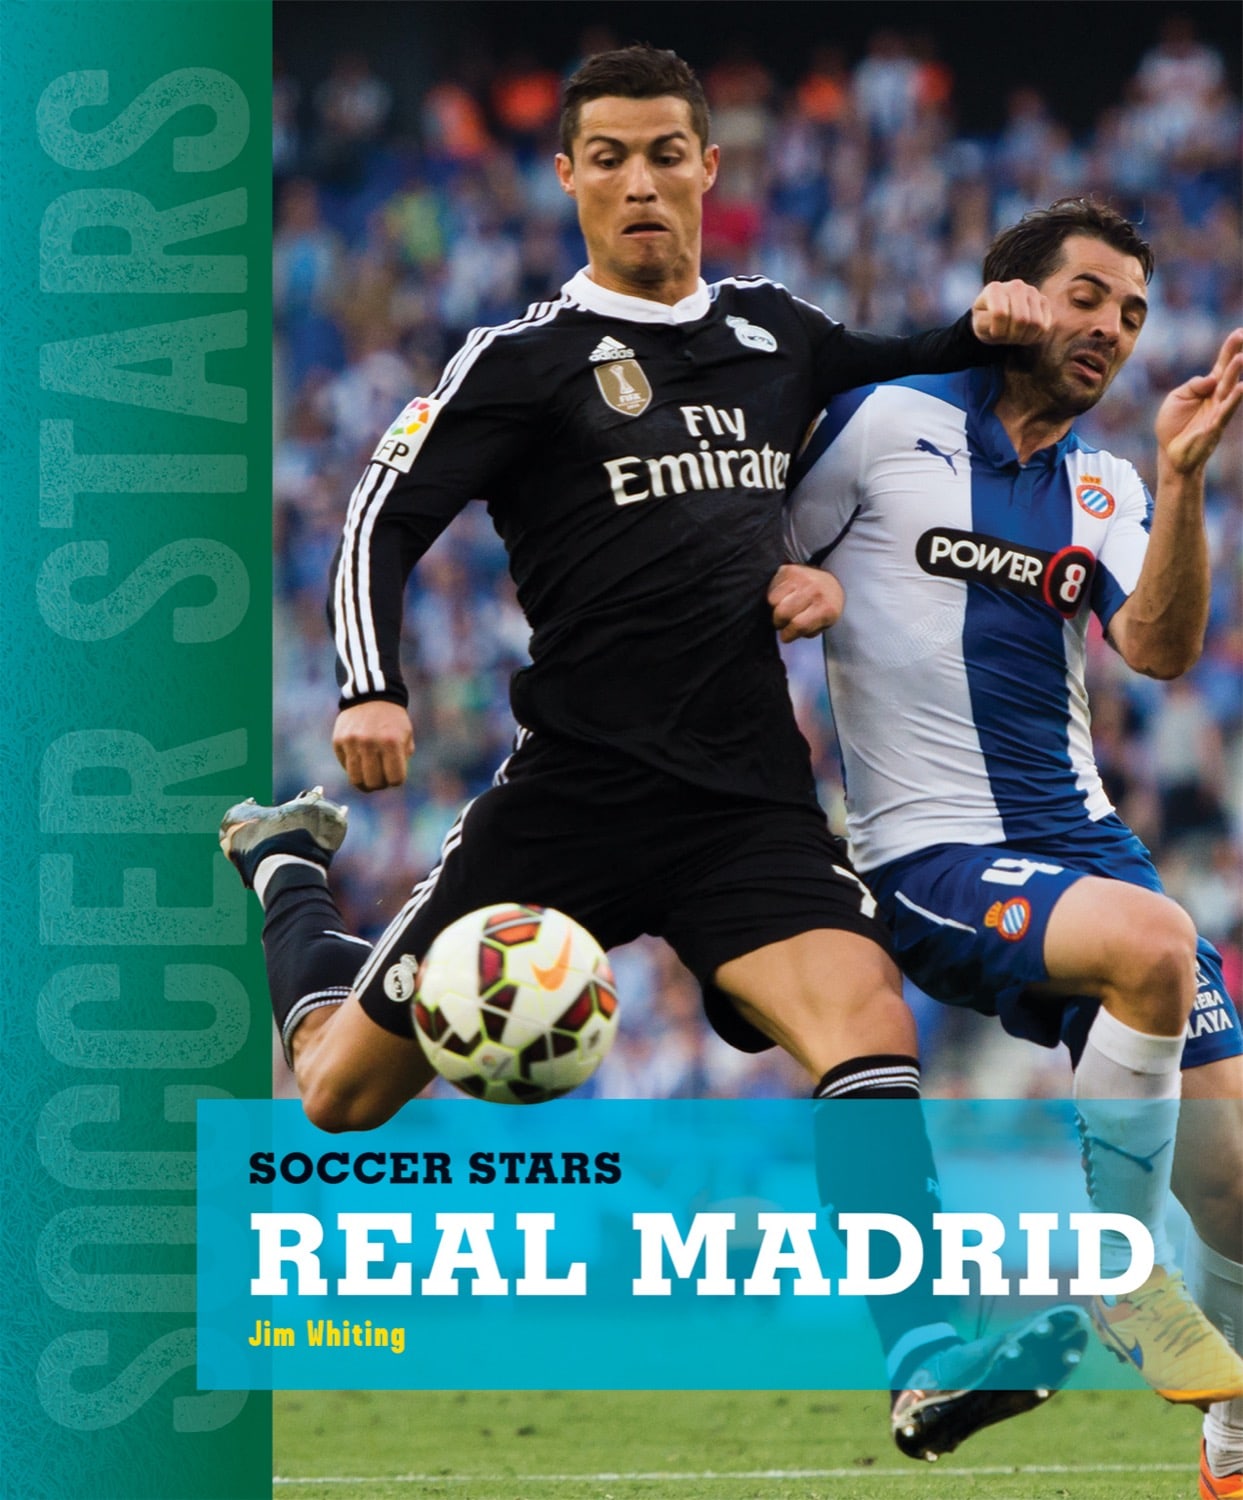 Soccer Stars: Real Madrid